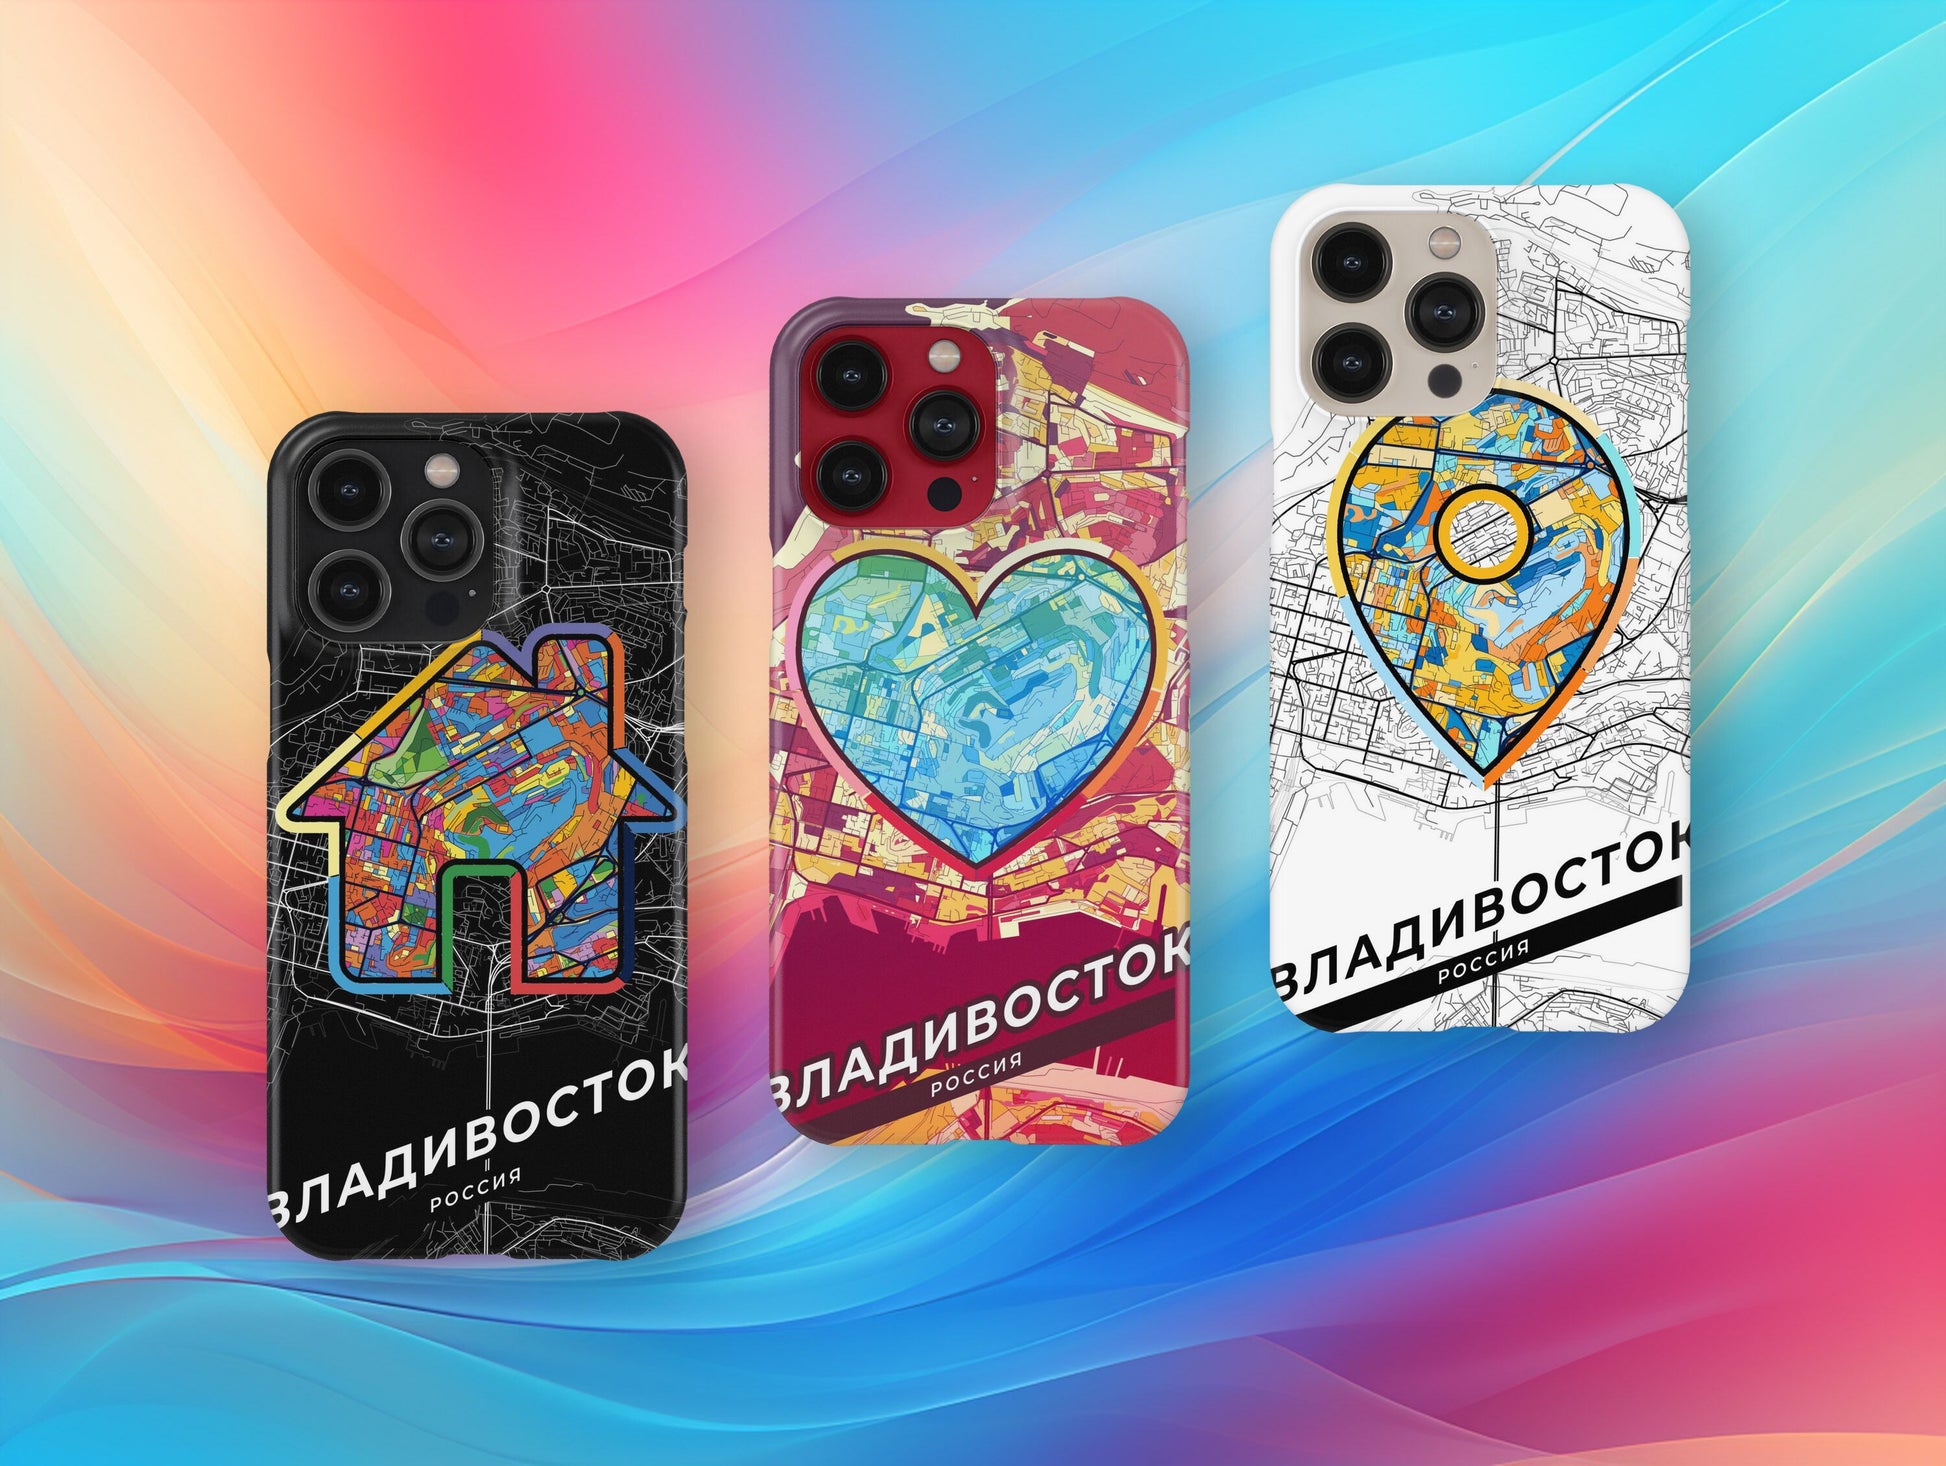 Vladivostok Russia slim phone case with colorful icon